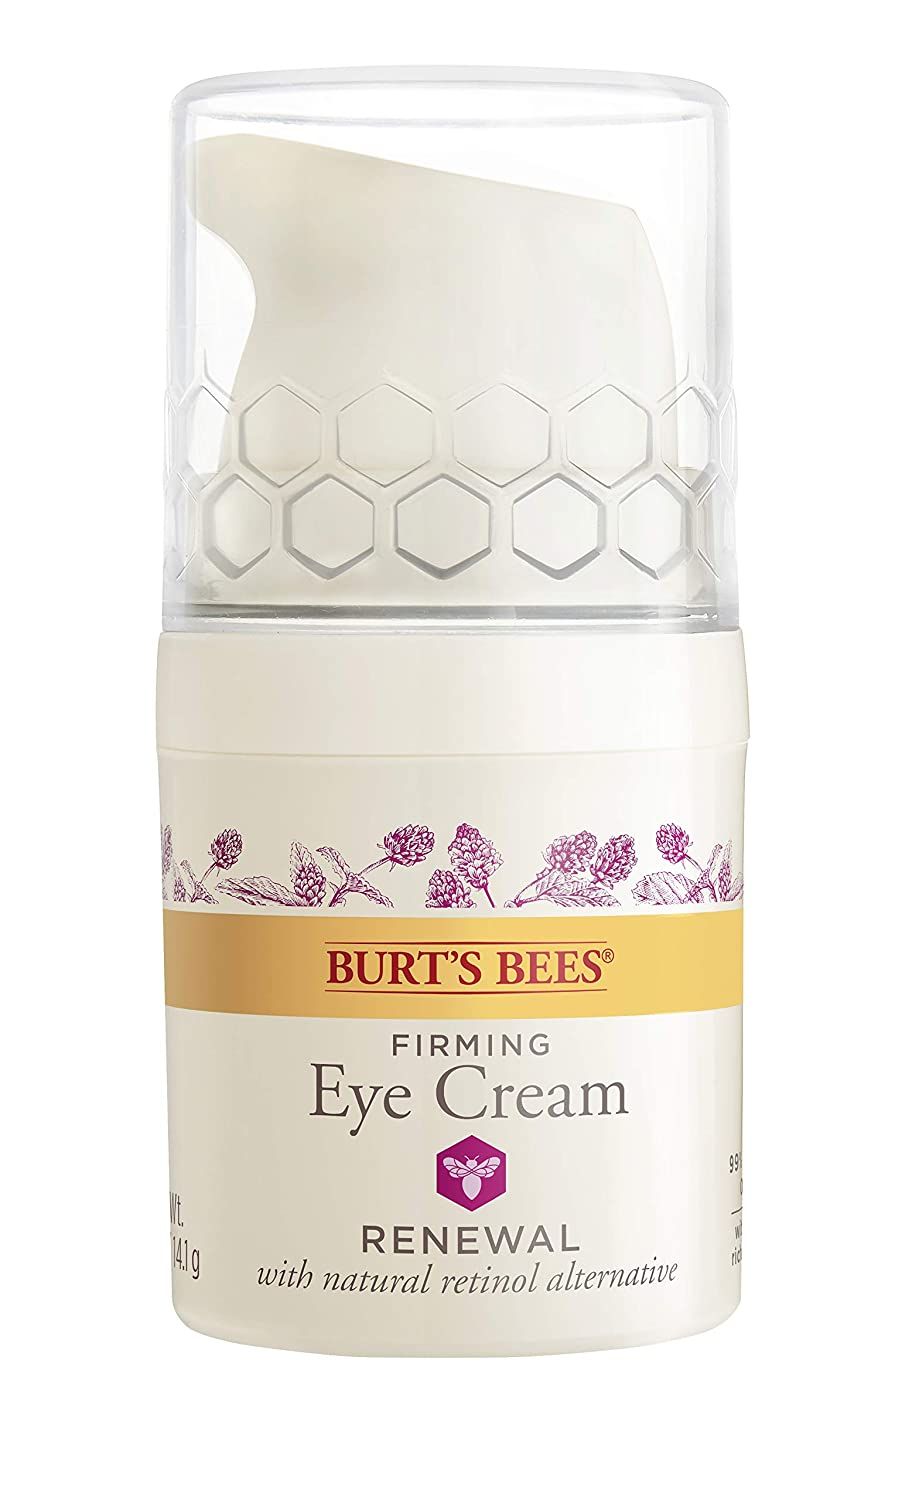 Burt’s Bees® Renewal Firming Eye Cream with Bakuchiol Natural Retinol Alternative - 0.5 oz